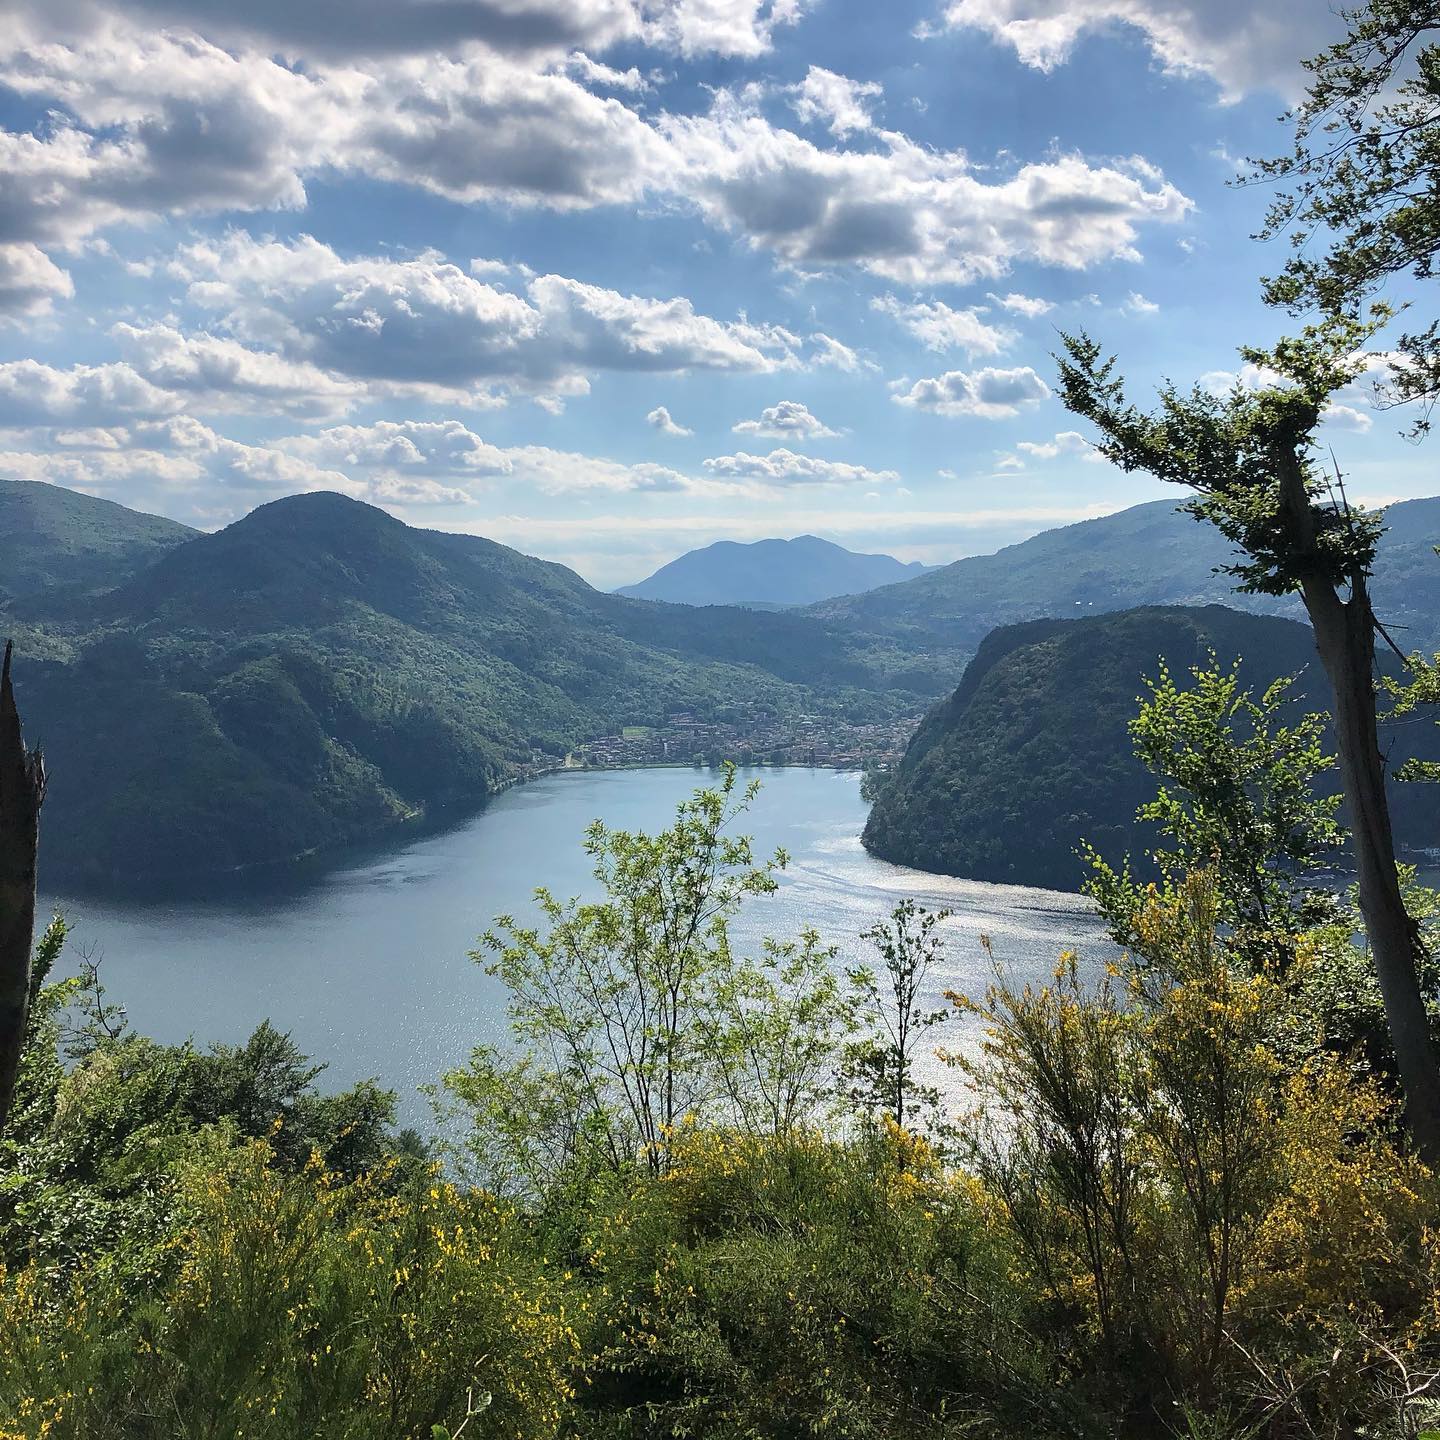 🇨🇭
.
.
.
.
.
#mountains #mtb #stramtb #nature #mtblife #mtblove #landscape_lovers #earthpix #landscapelovers #ourplanetdaily #welivetoexplore #fantastic_earth #svizzera #switzerland #schweiz #ticino #switzerlandpictures #inlovewithswitzerland #ticinomoments #lugano #inspiration #passion #motivation #experience #explore #lake #landscapephotography #luganolake